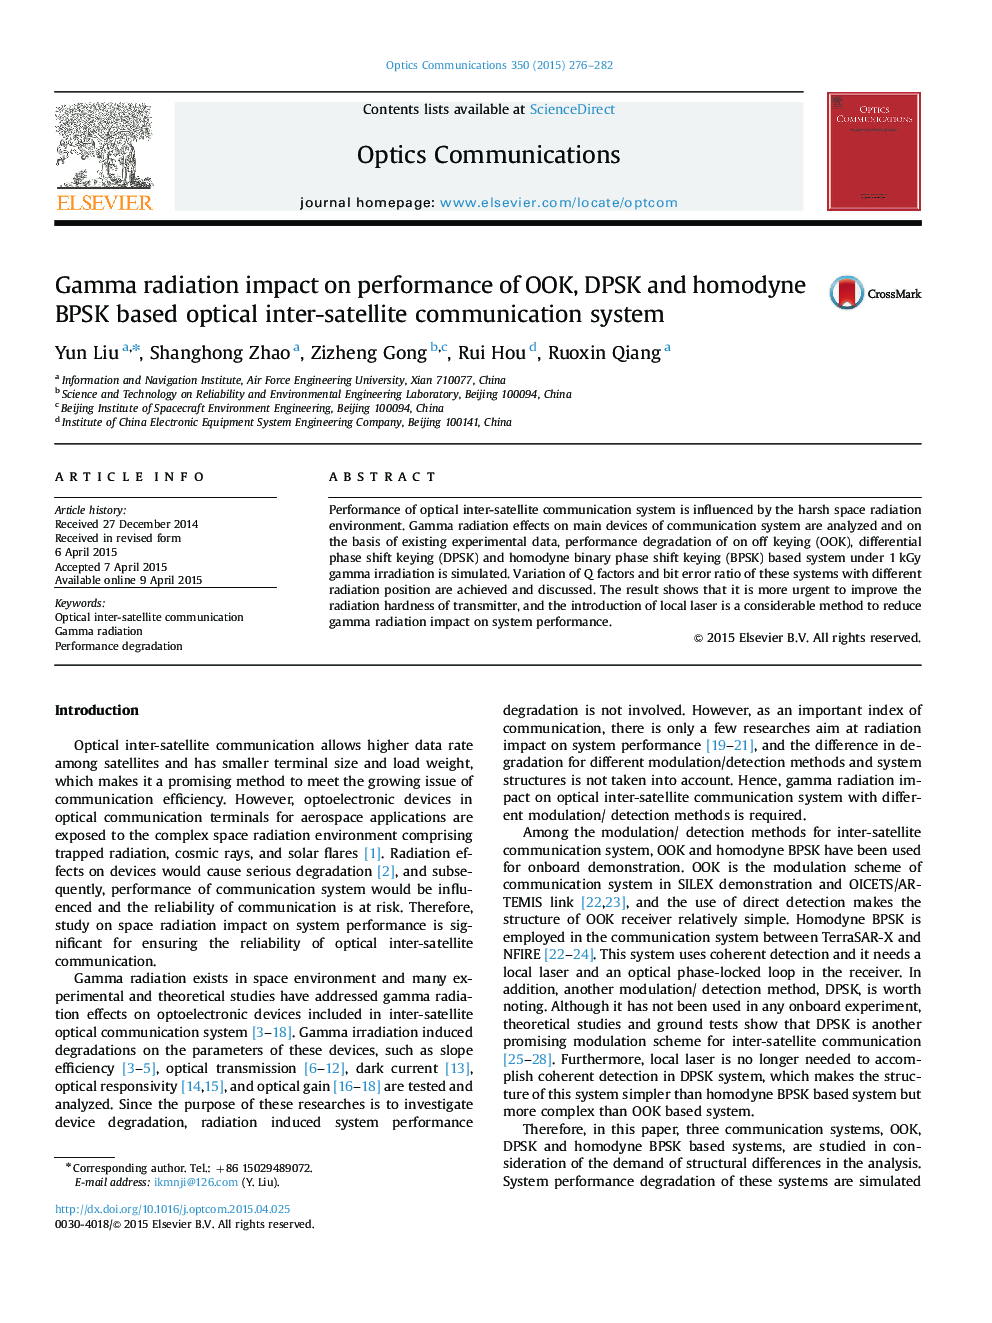 Gamma radiation impact on performance of OOK, DPSK and homodyne BPSK based optical inter-satellite communication system